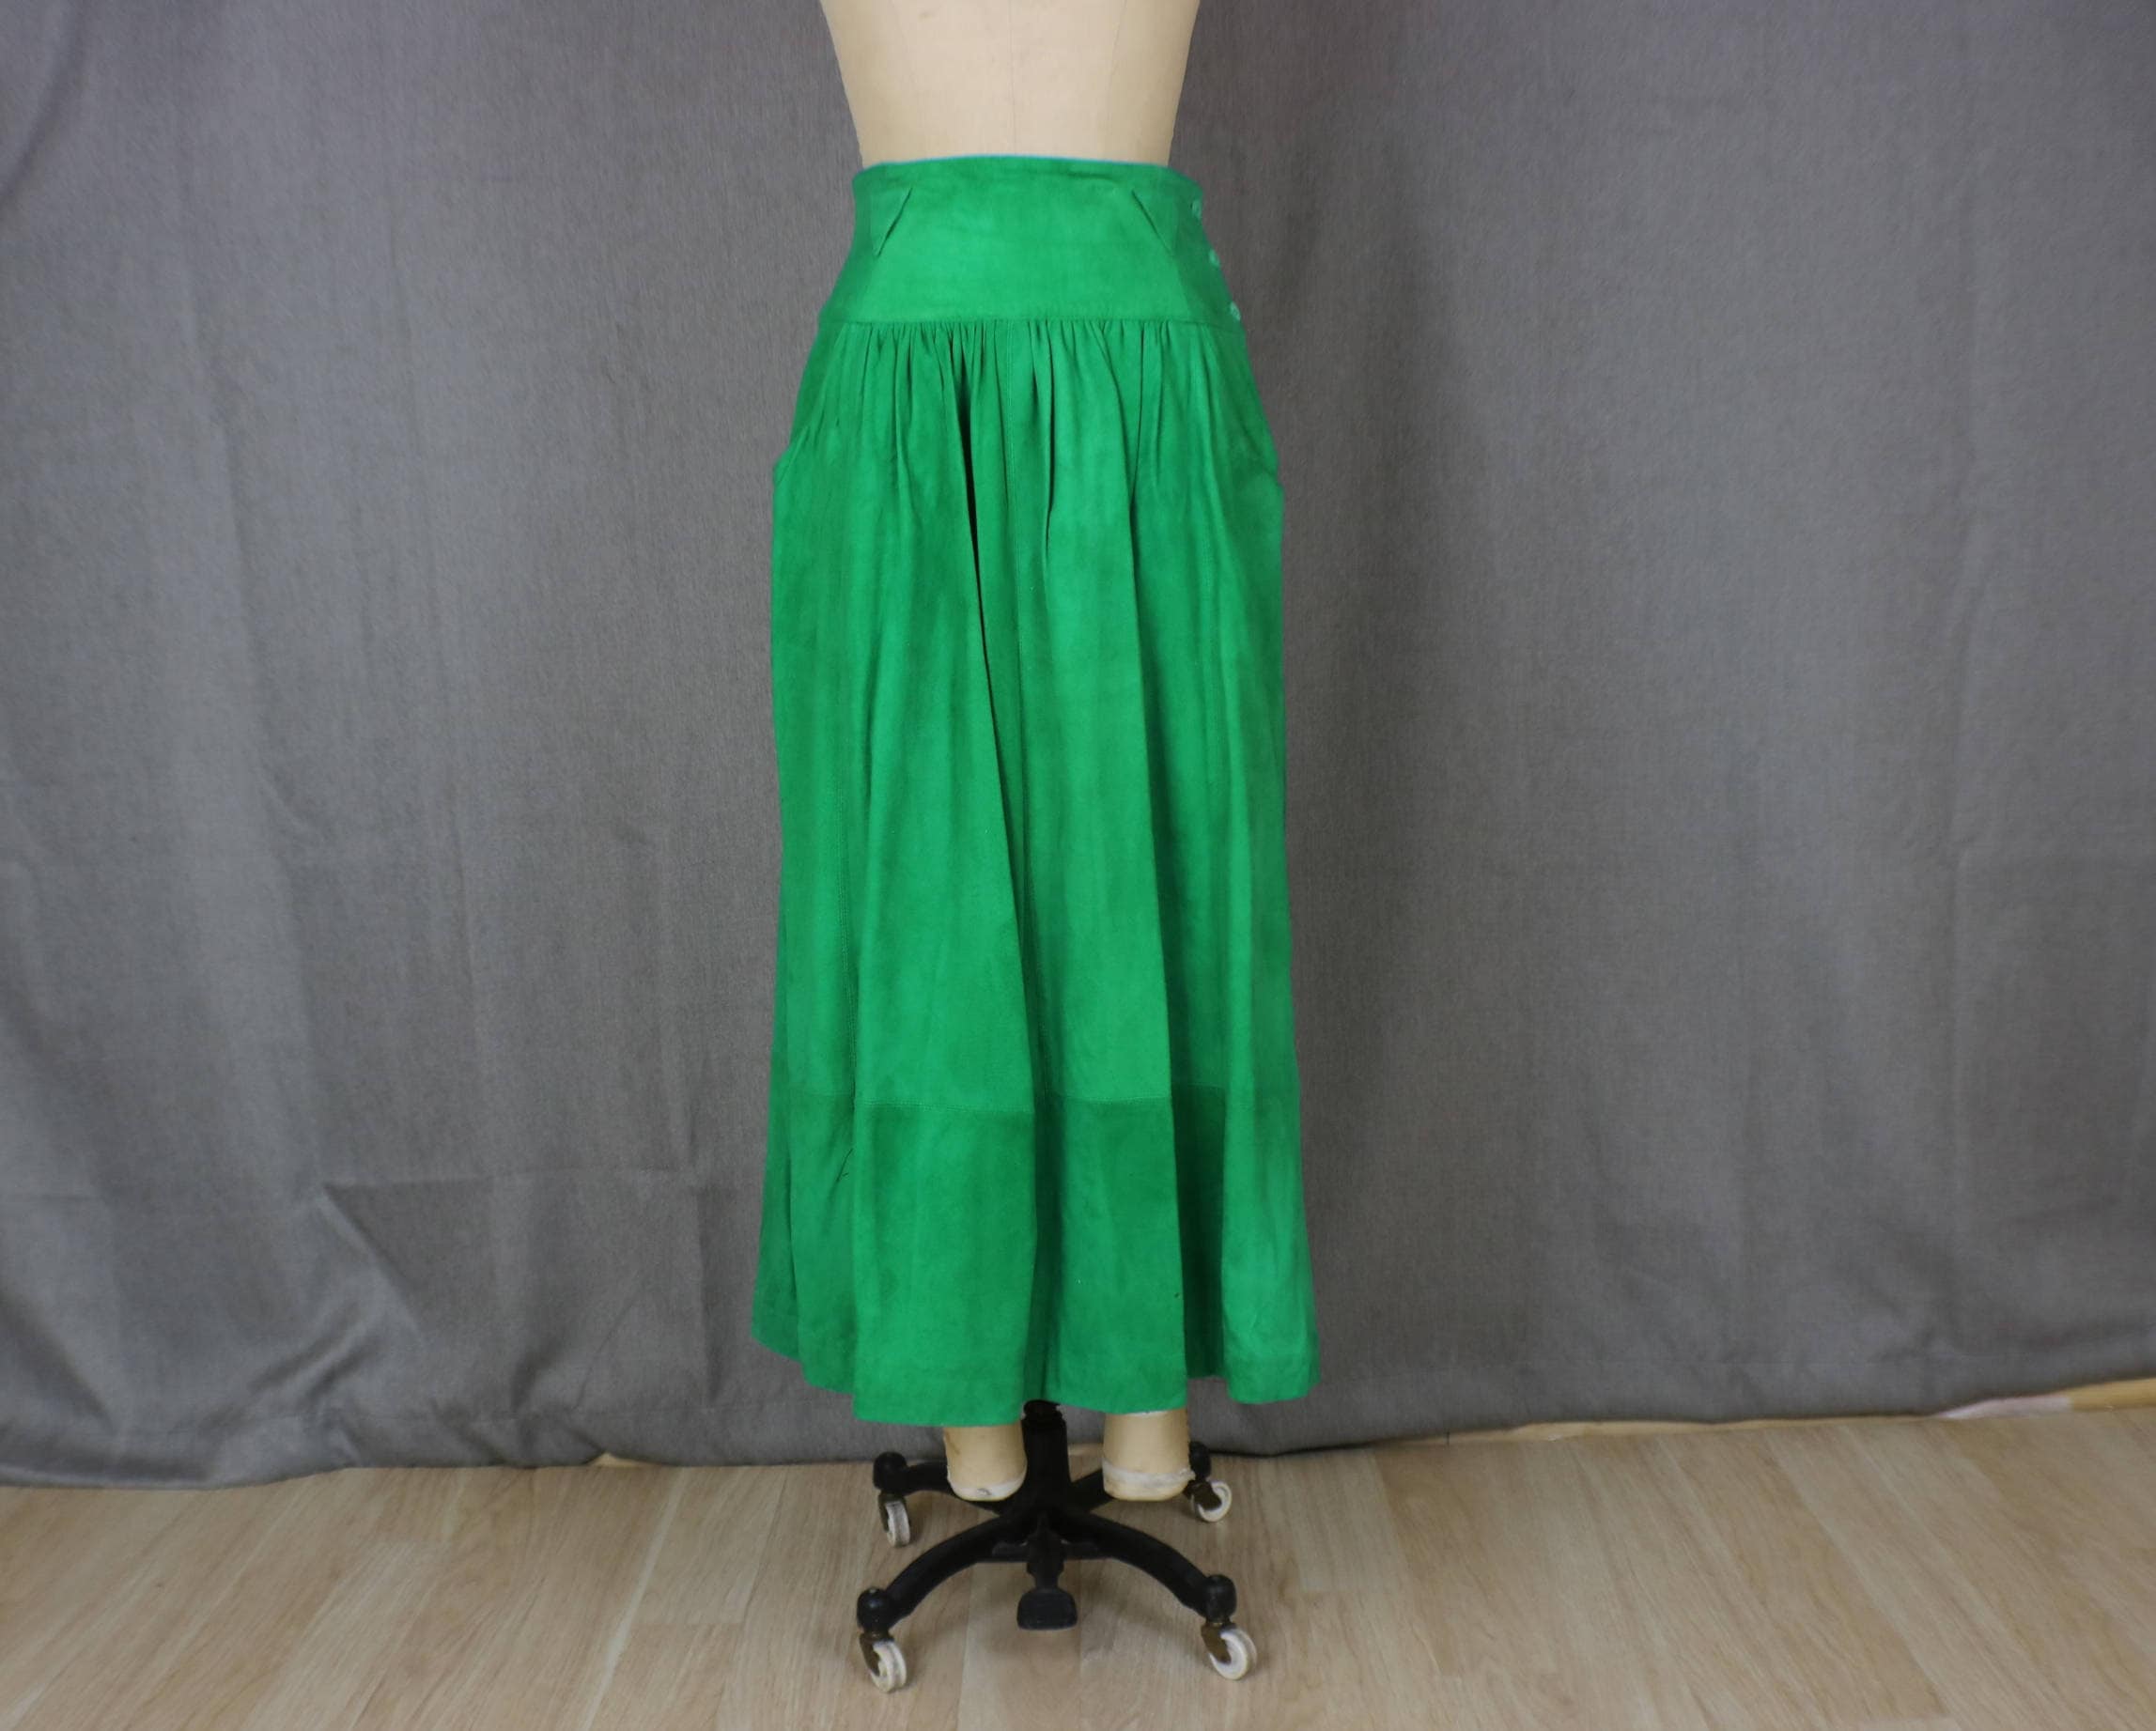 Kelly Green Suede Skirt / High Waist Full Leather Skirt